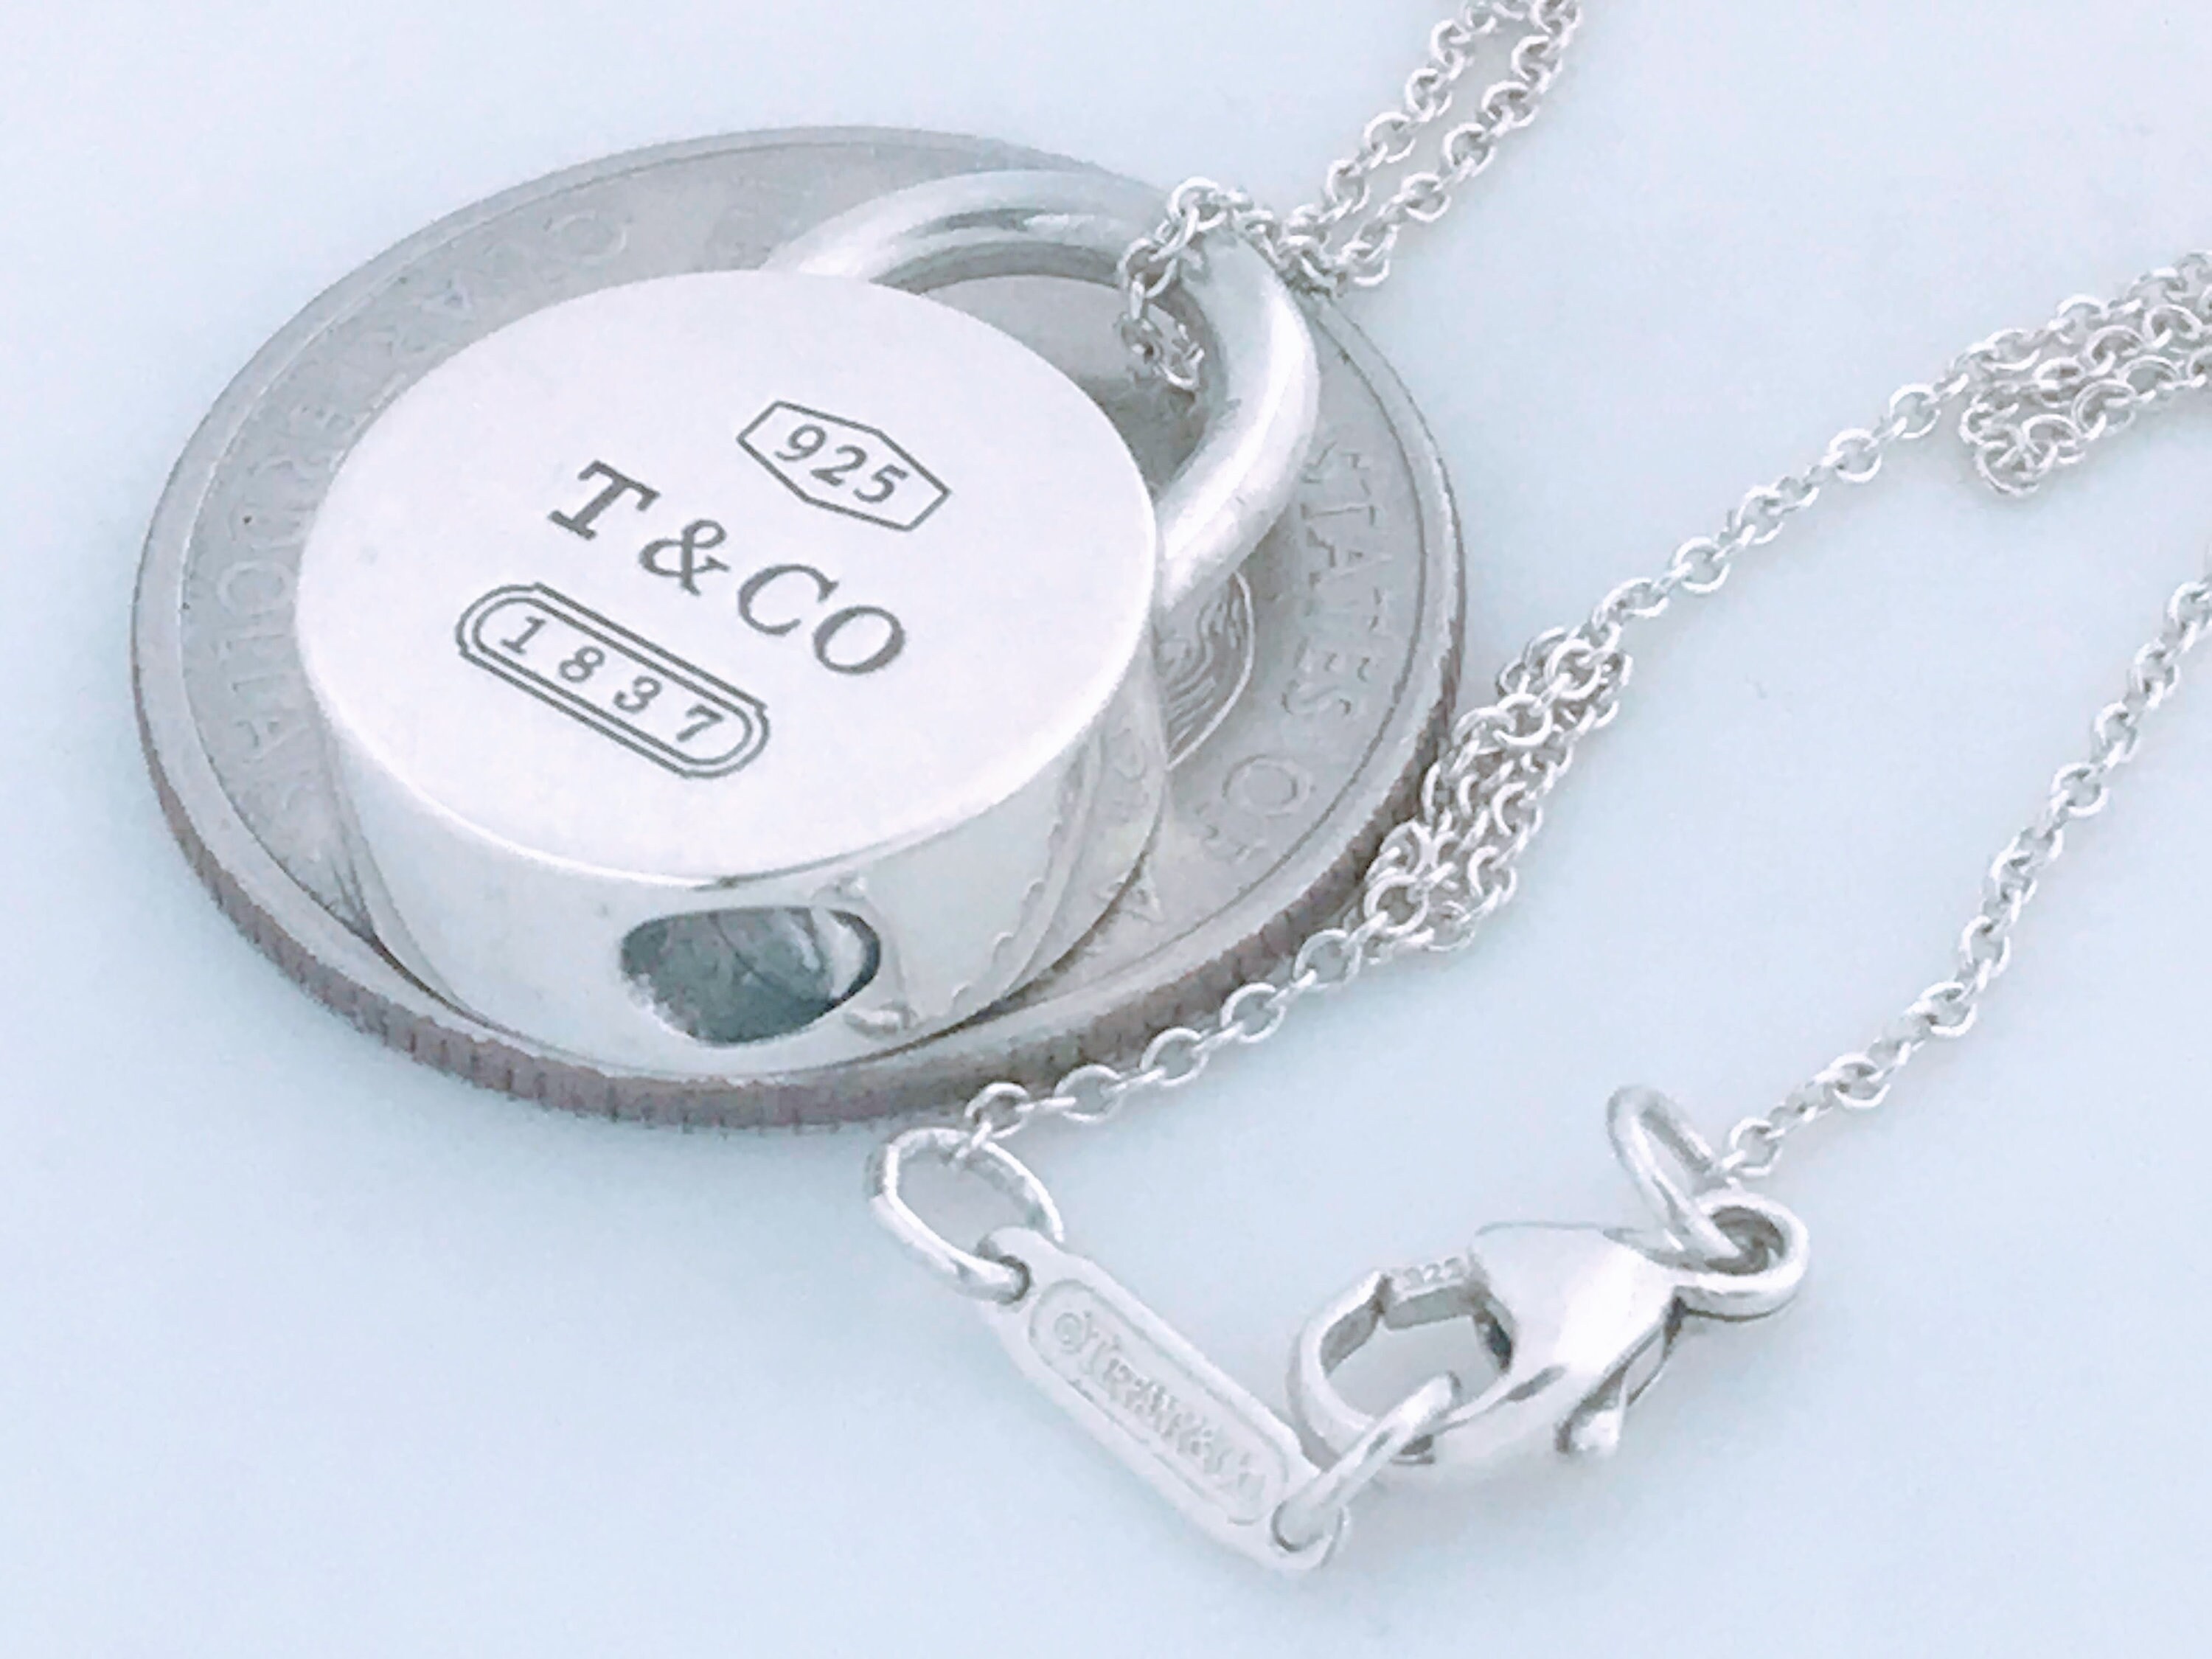 Tiffany & Co. 1837 Padlock Necklace - Sterling Silver Pendant Necklace,  Necklaces - TIF69181